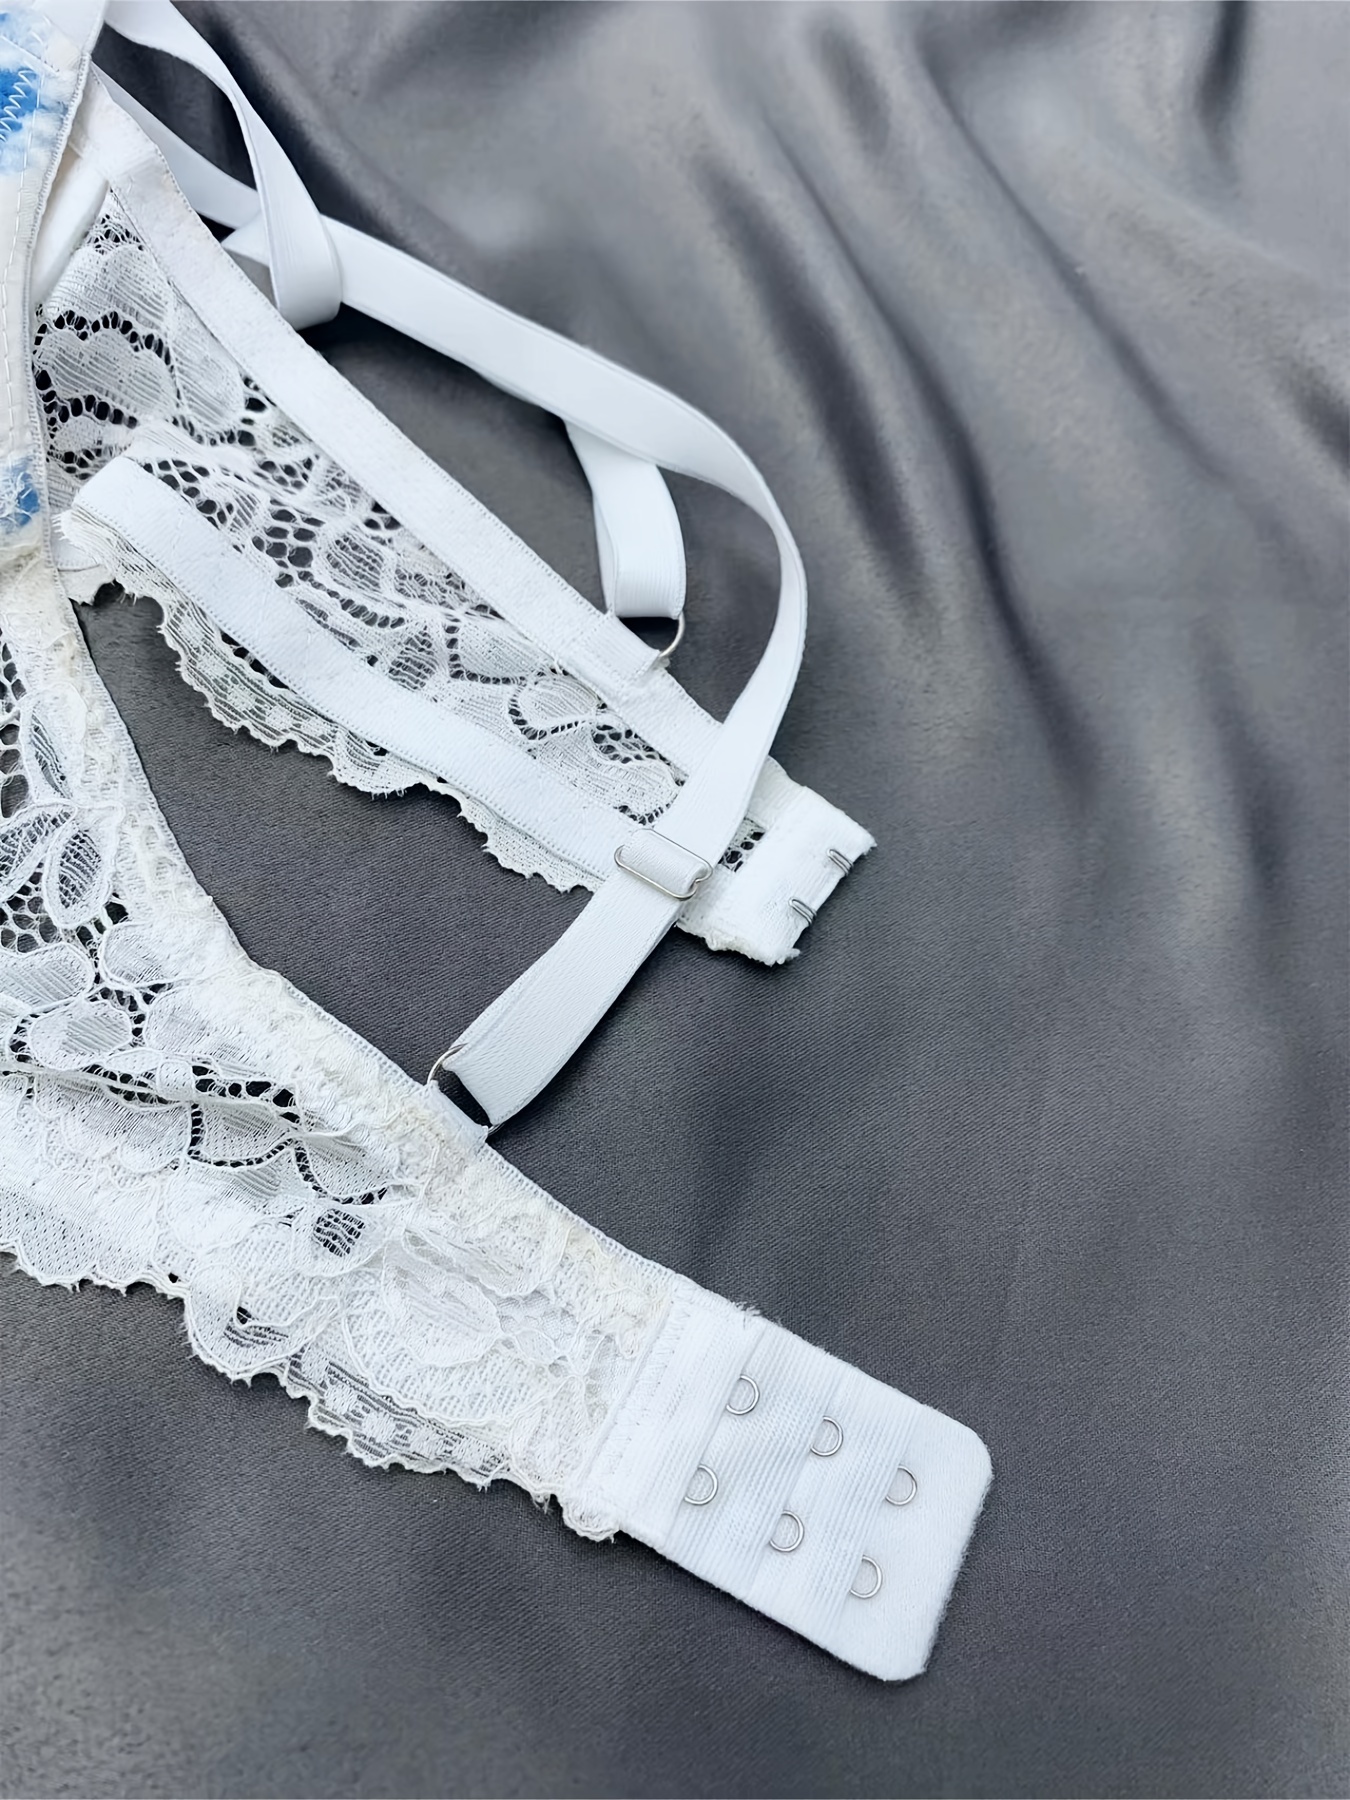 Floral Lace Women Bra Set Push Up Wireless Underwear Set Girls